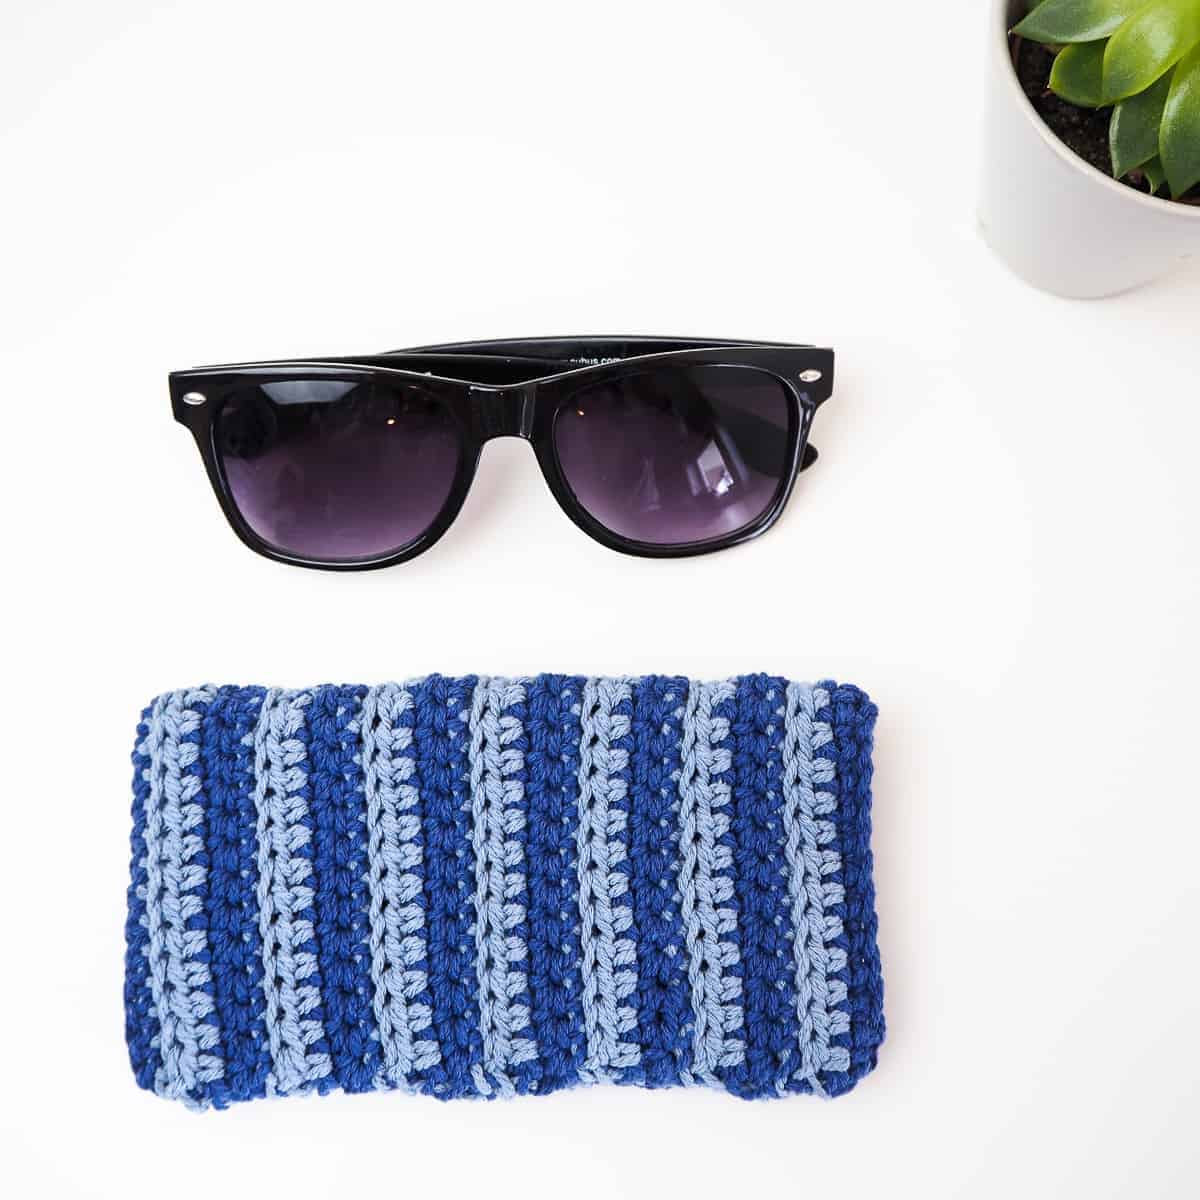 Glasses Pouch - Free Crochet Pattern